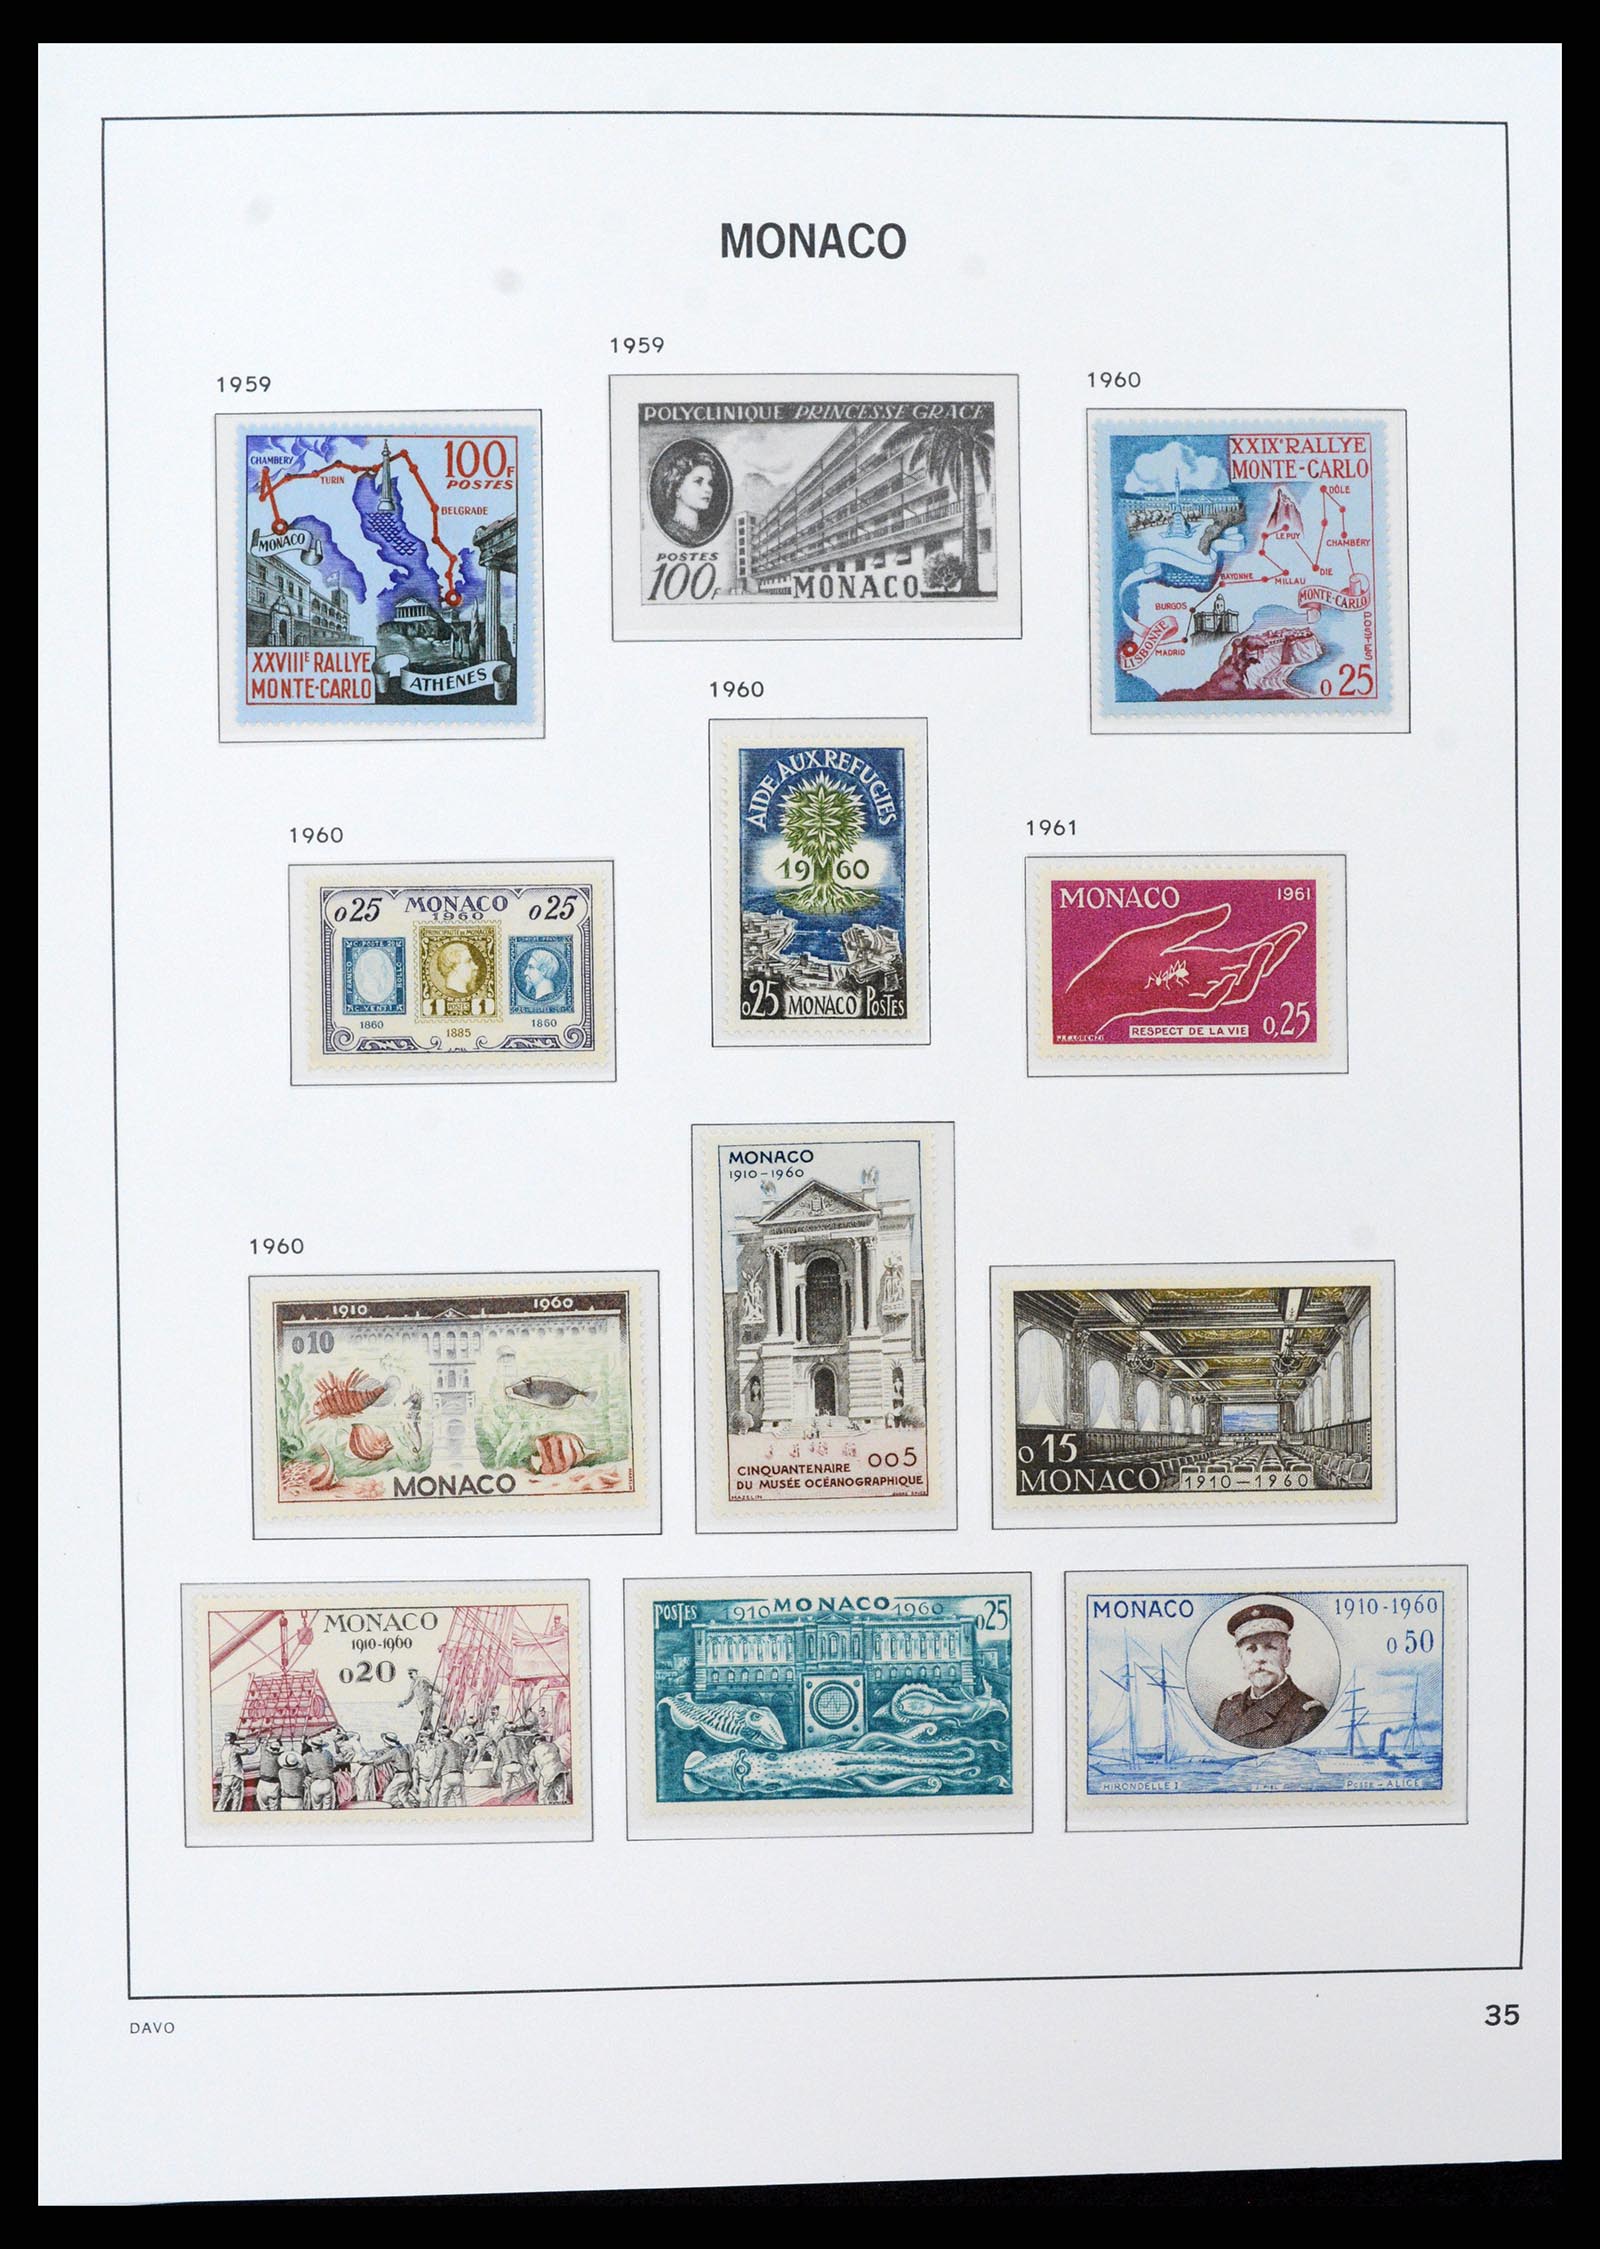 37279 035 - Stamp collection 37279 Monaco 1885-1969.